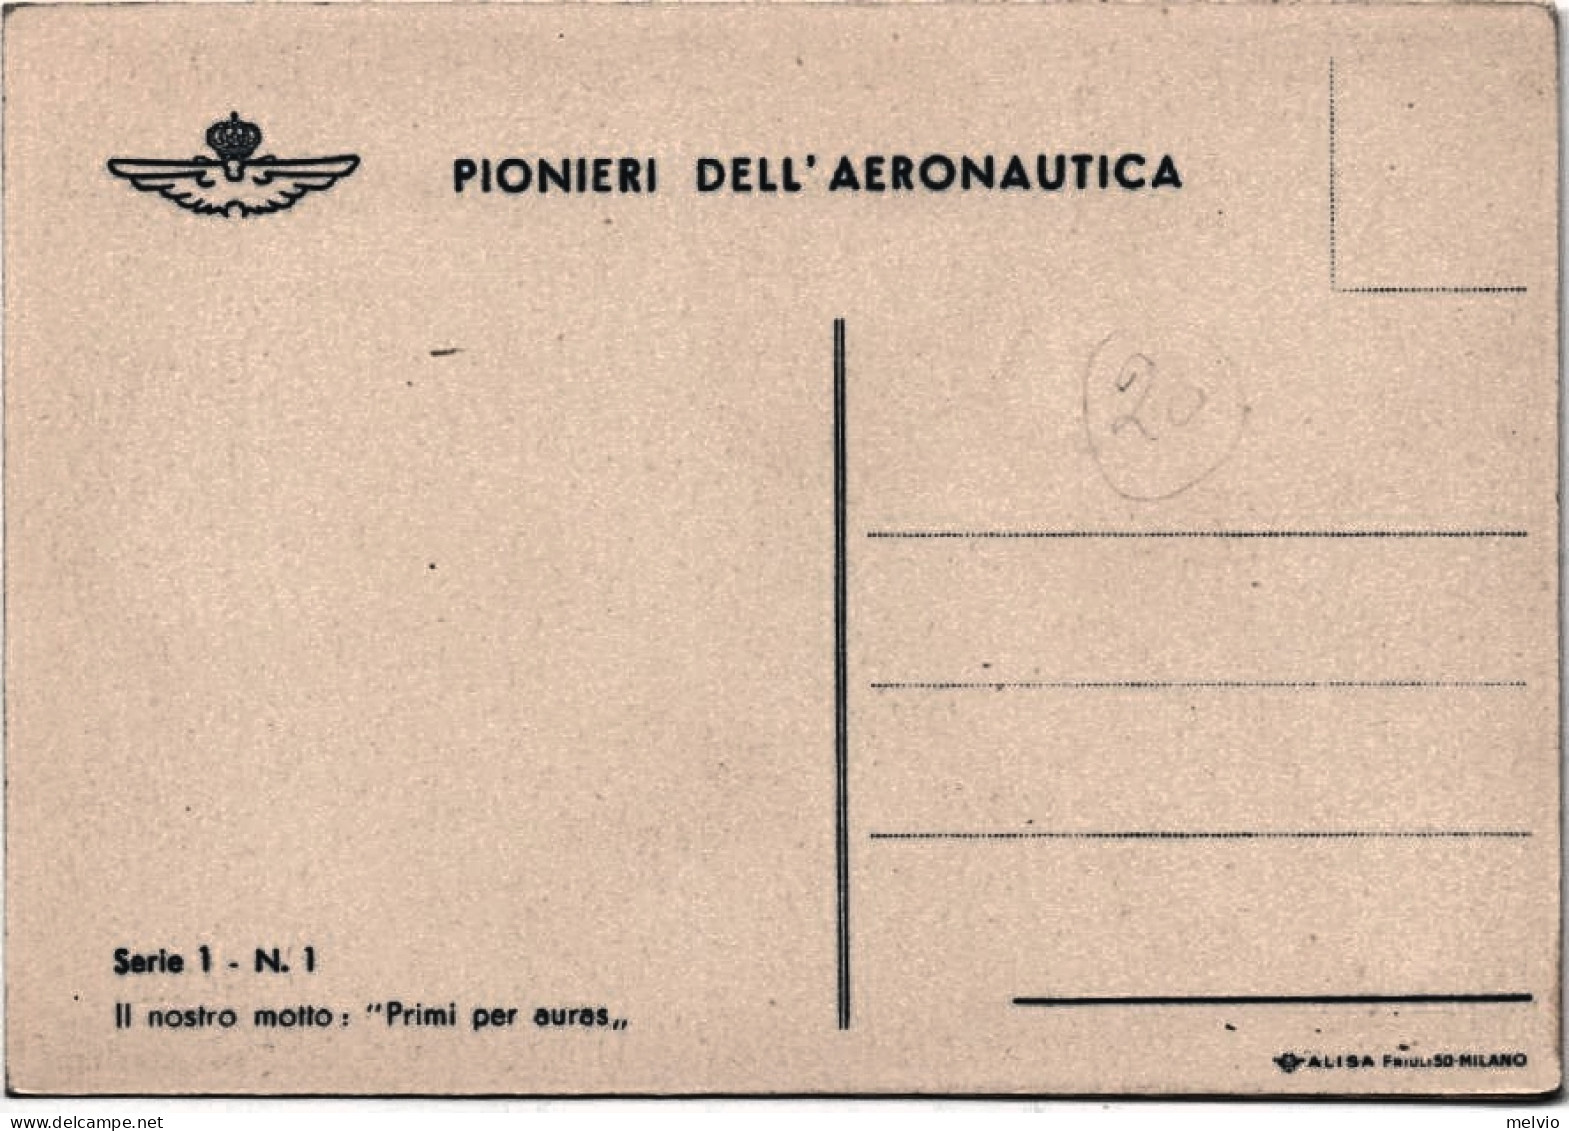 Pionieri Dell'Aeronautica, 2 Agosto1914, "PRIMI PER AURAS" - Patriotiques